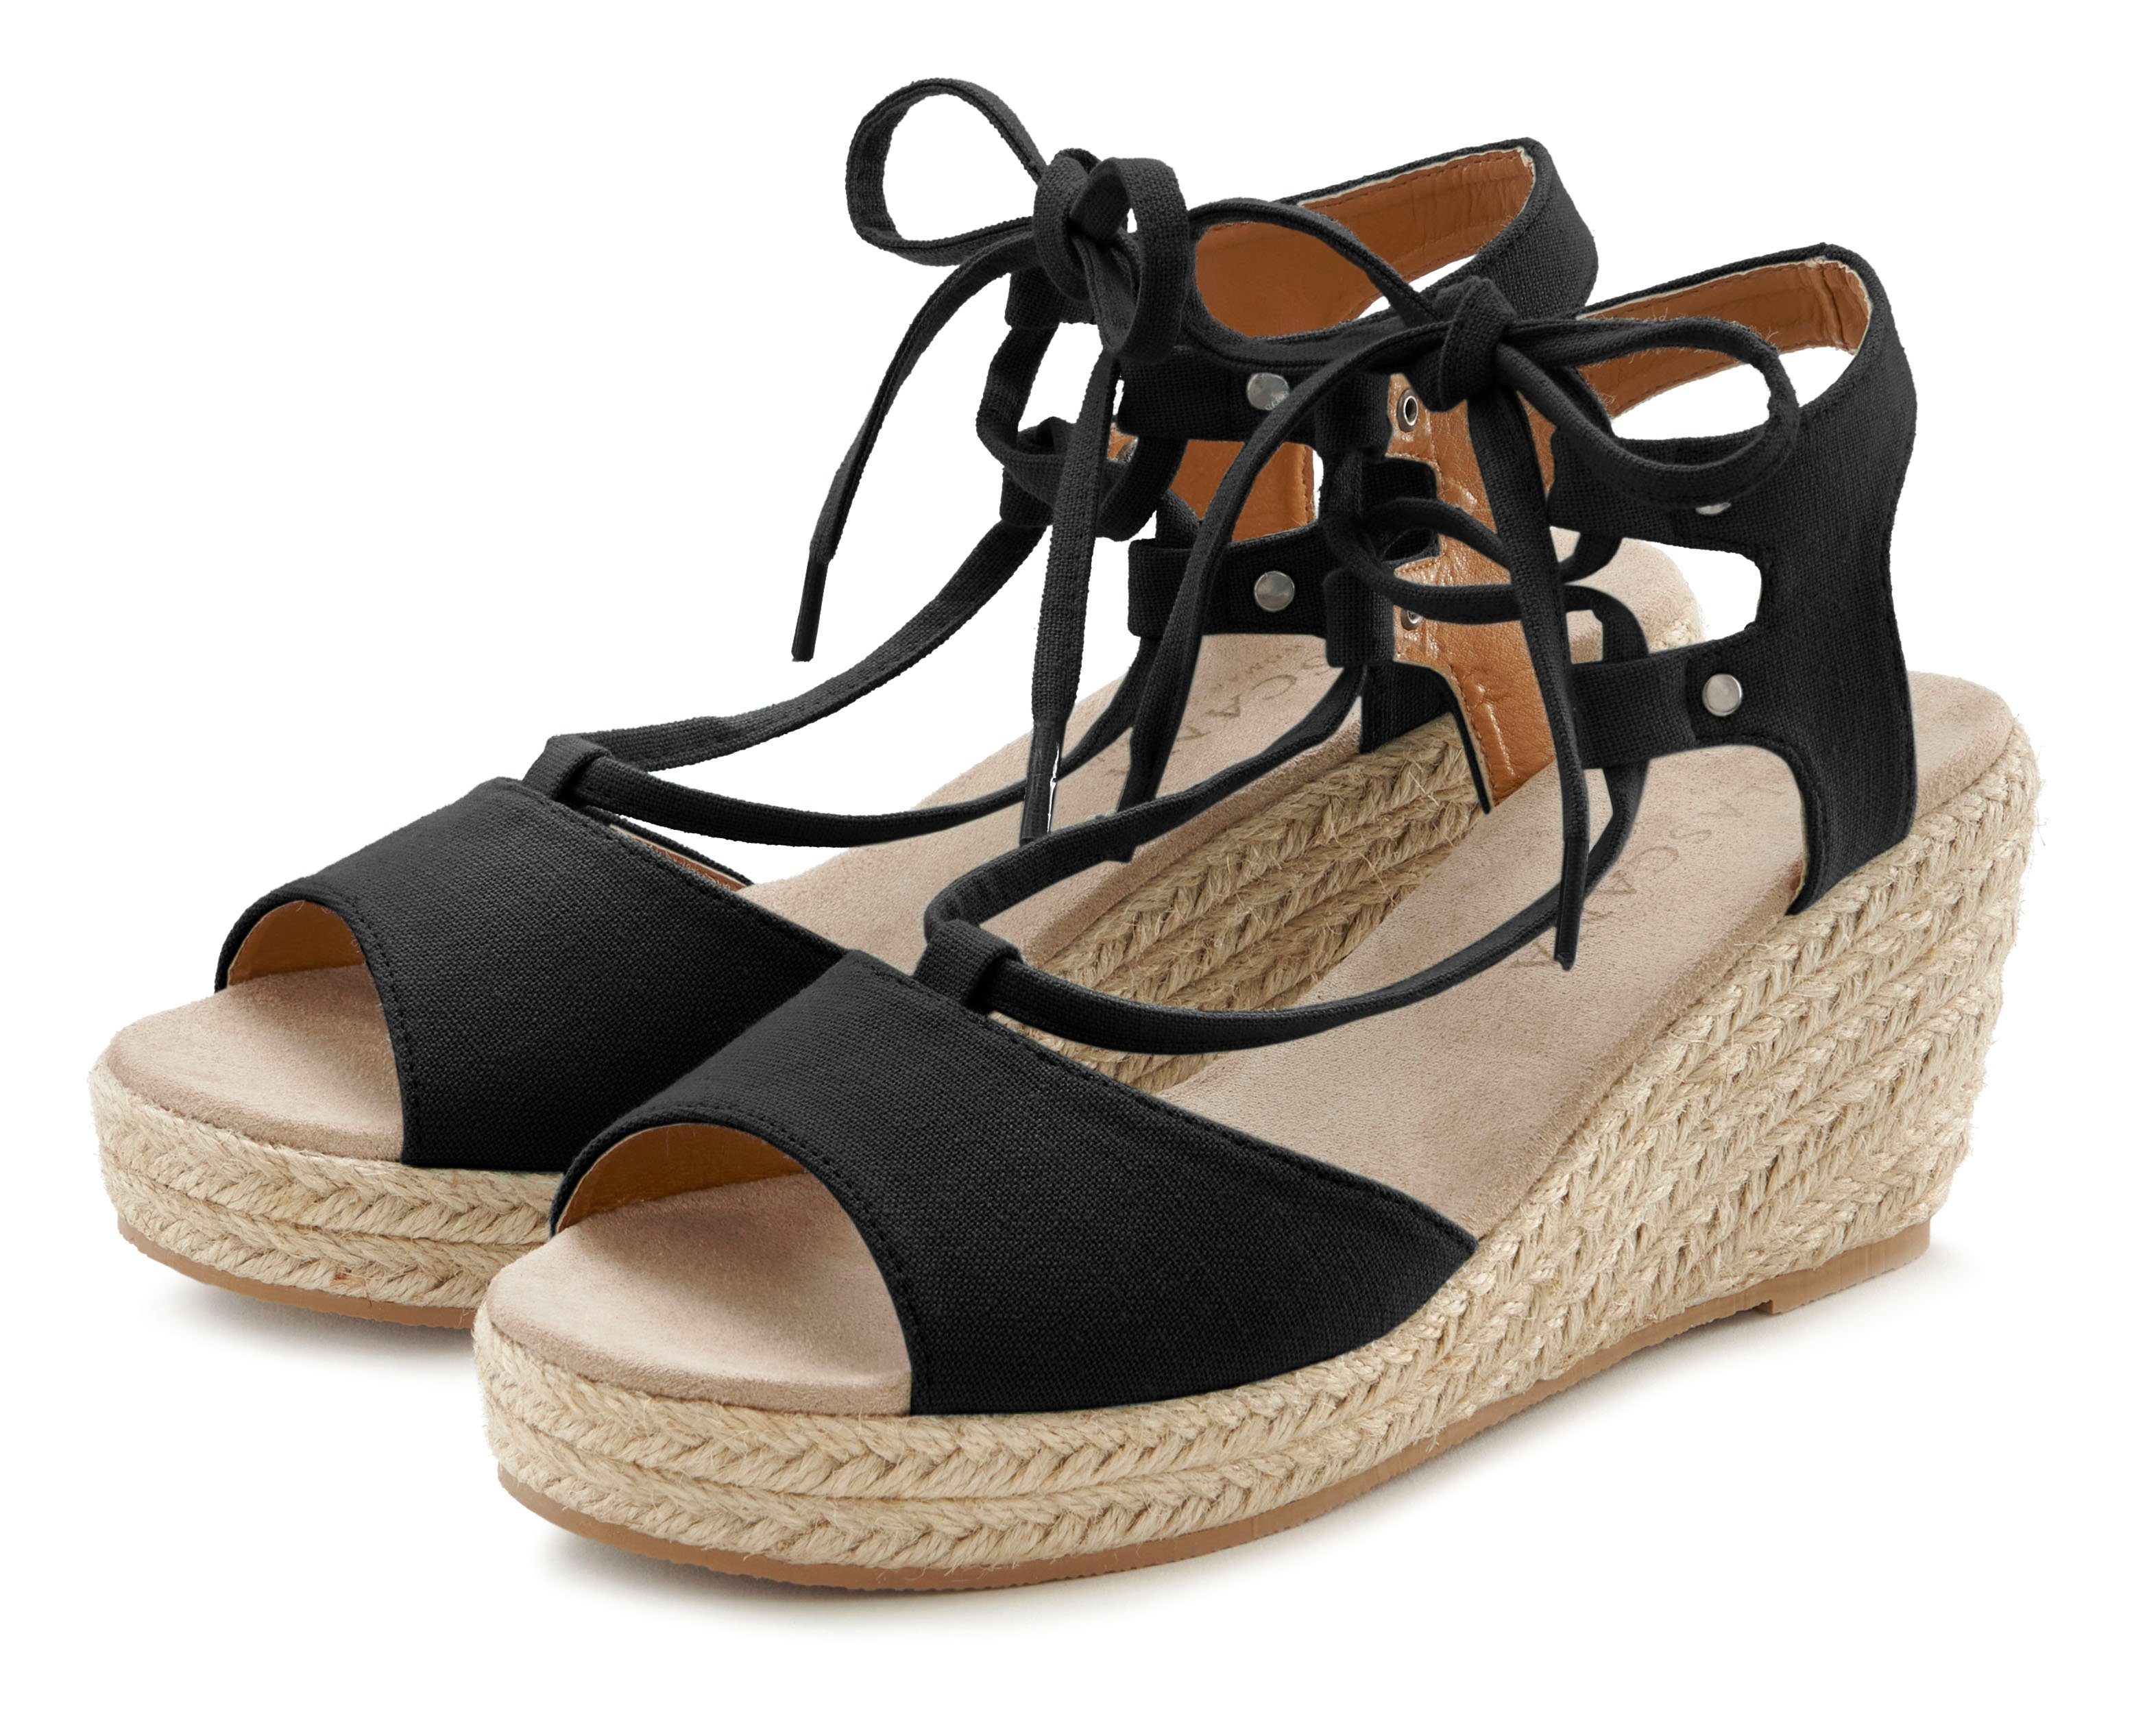 LASCANA Keilsandalette Sandalette, Sandale mit Keilabsatz, Bast-Optik & Schnürung VEGAN schwarz